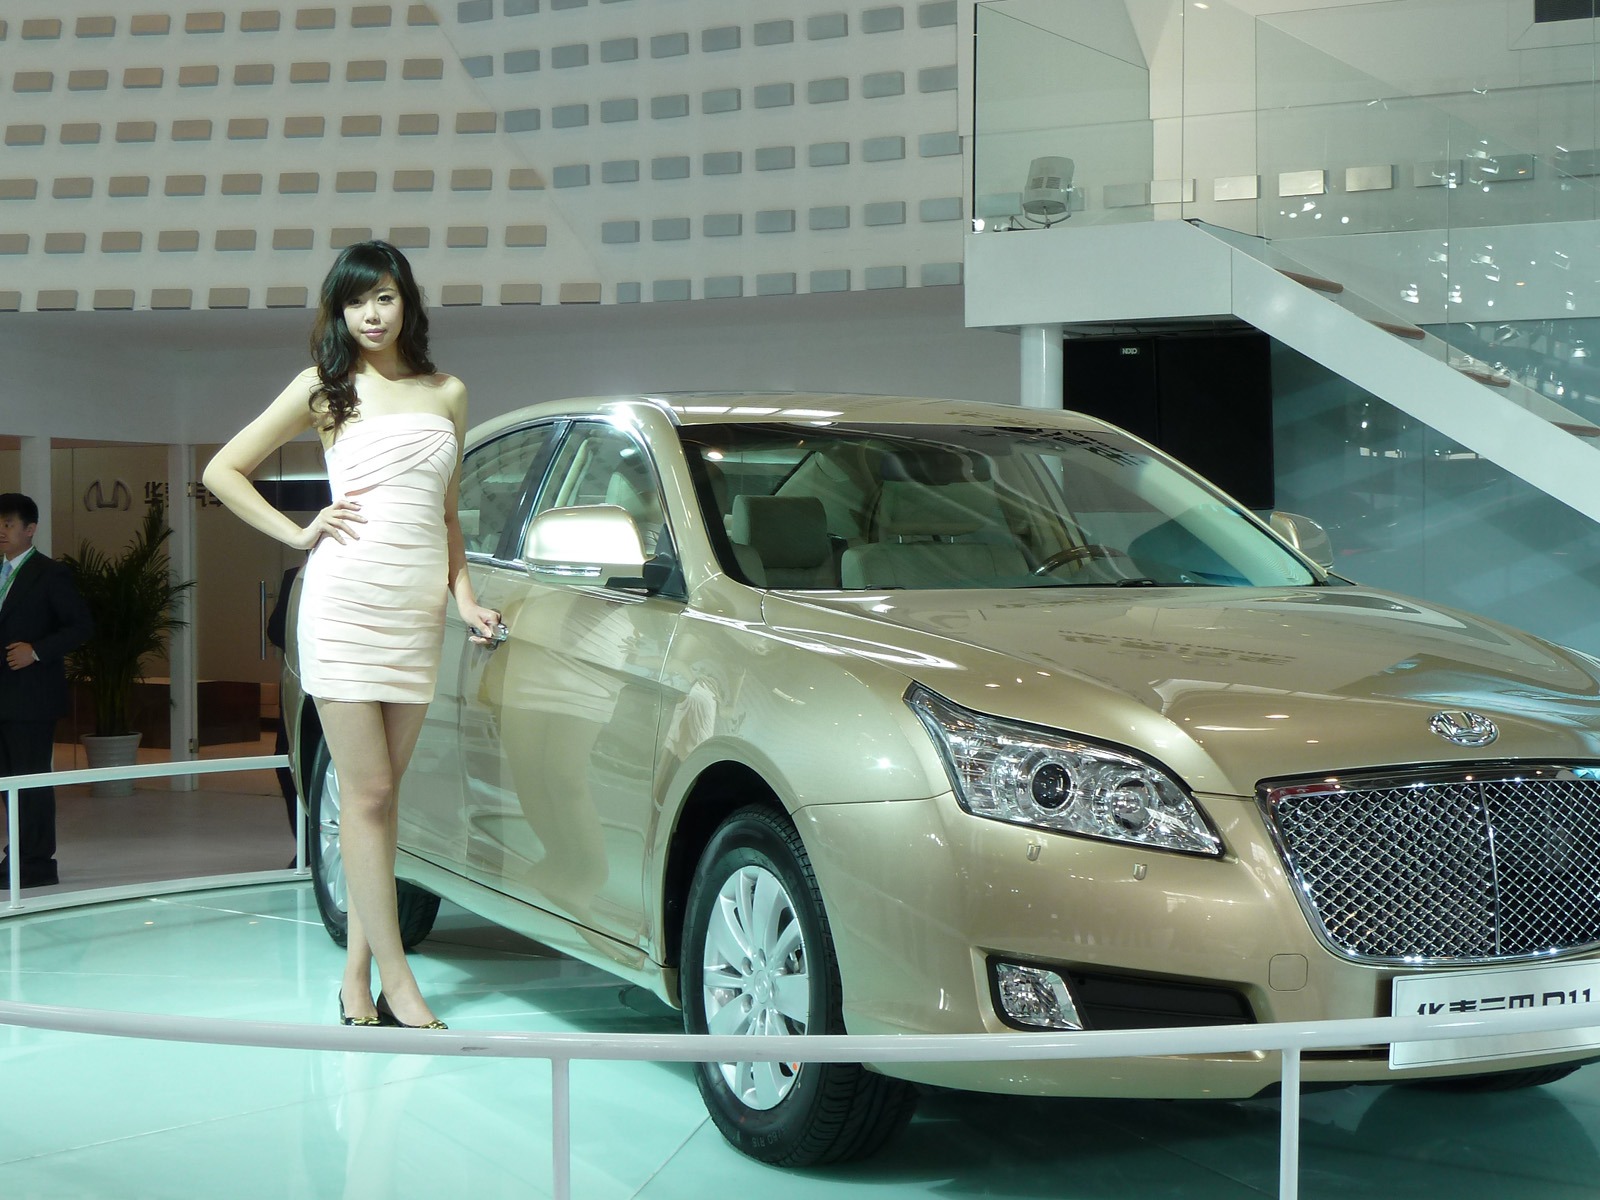 2010 Salón del Automóvil de Pekín (Obras Gemini Sueño) #16 - 1600x1200